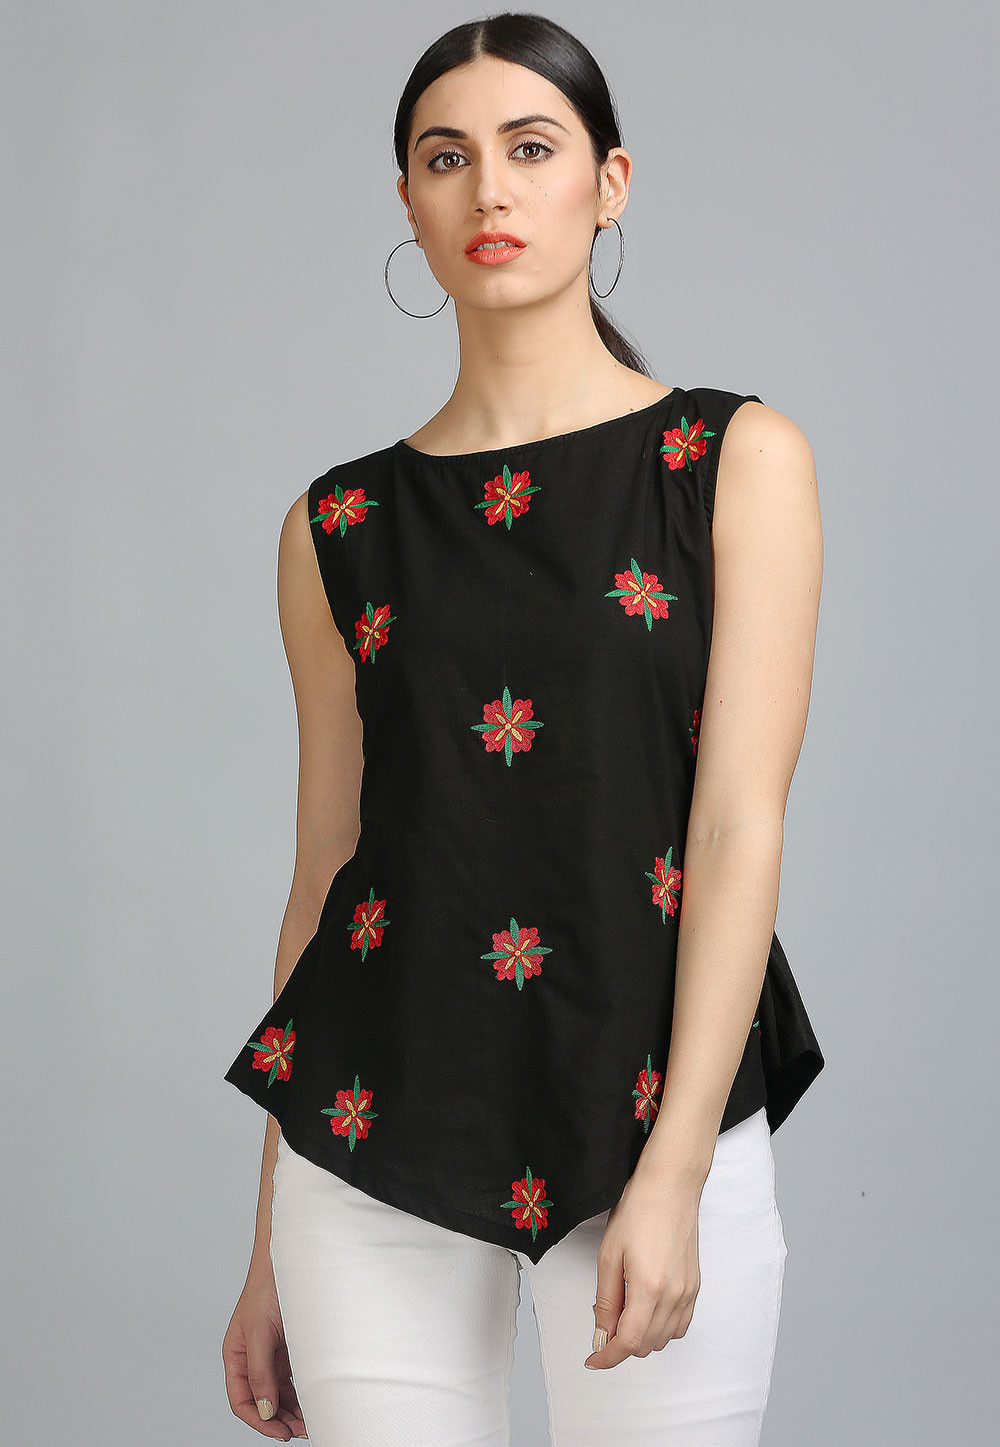 Buy Embroidered Cotton Top in Black Online : TZQ473 - Utsav Fashion